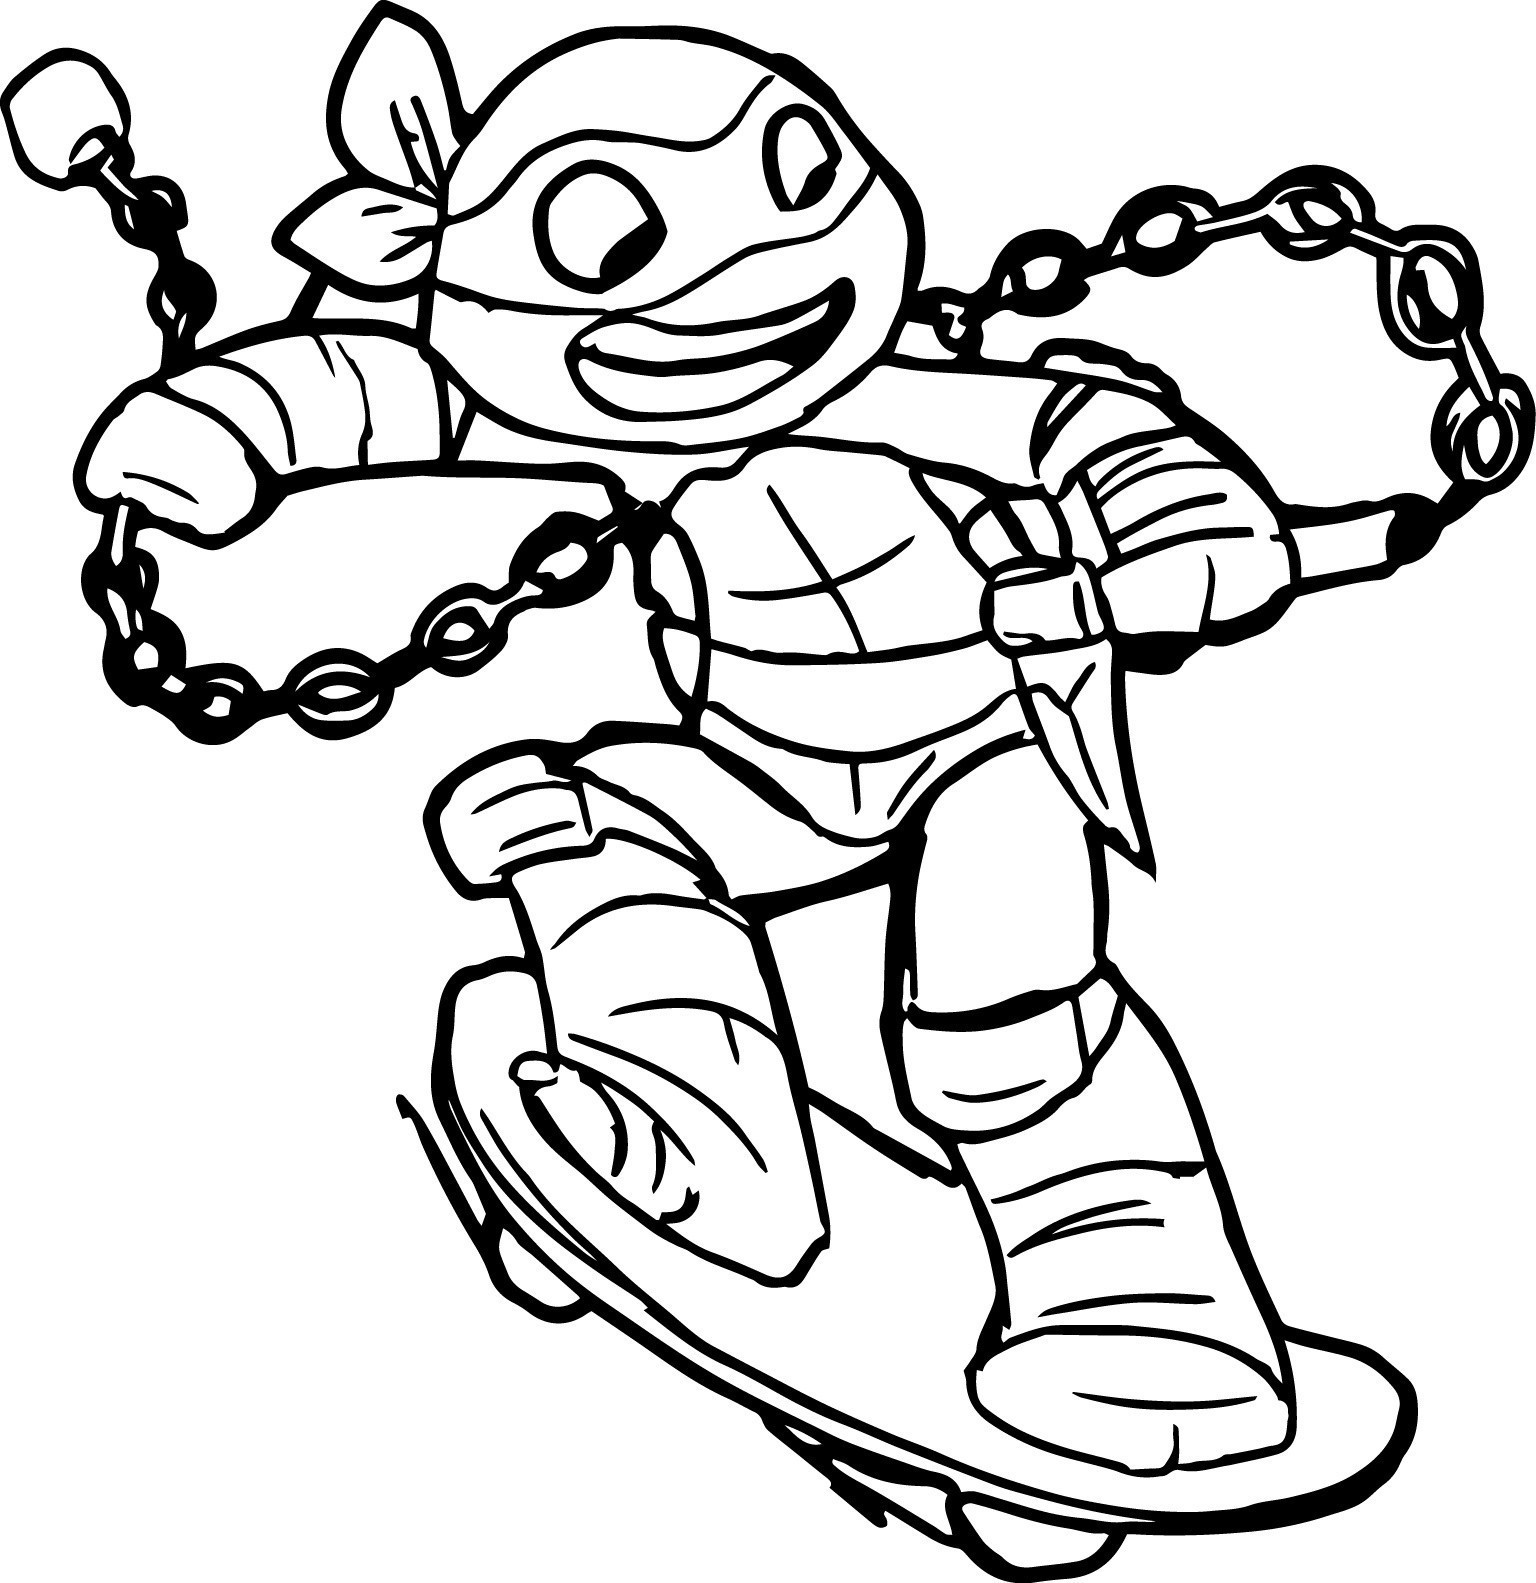 Girl Turtle Coloring Pages
 Teenage Mutant Ninja Turtles Coloring Pages Best